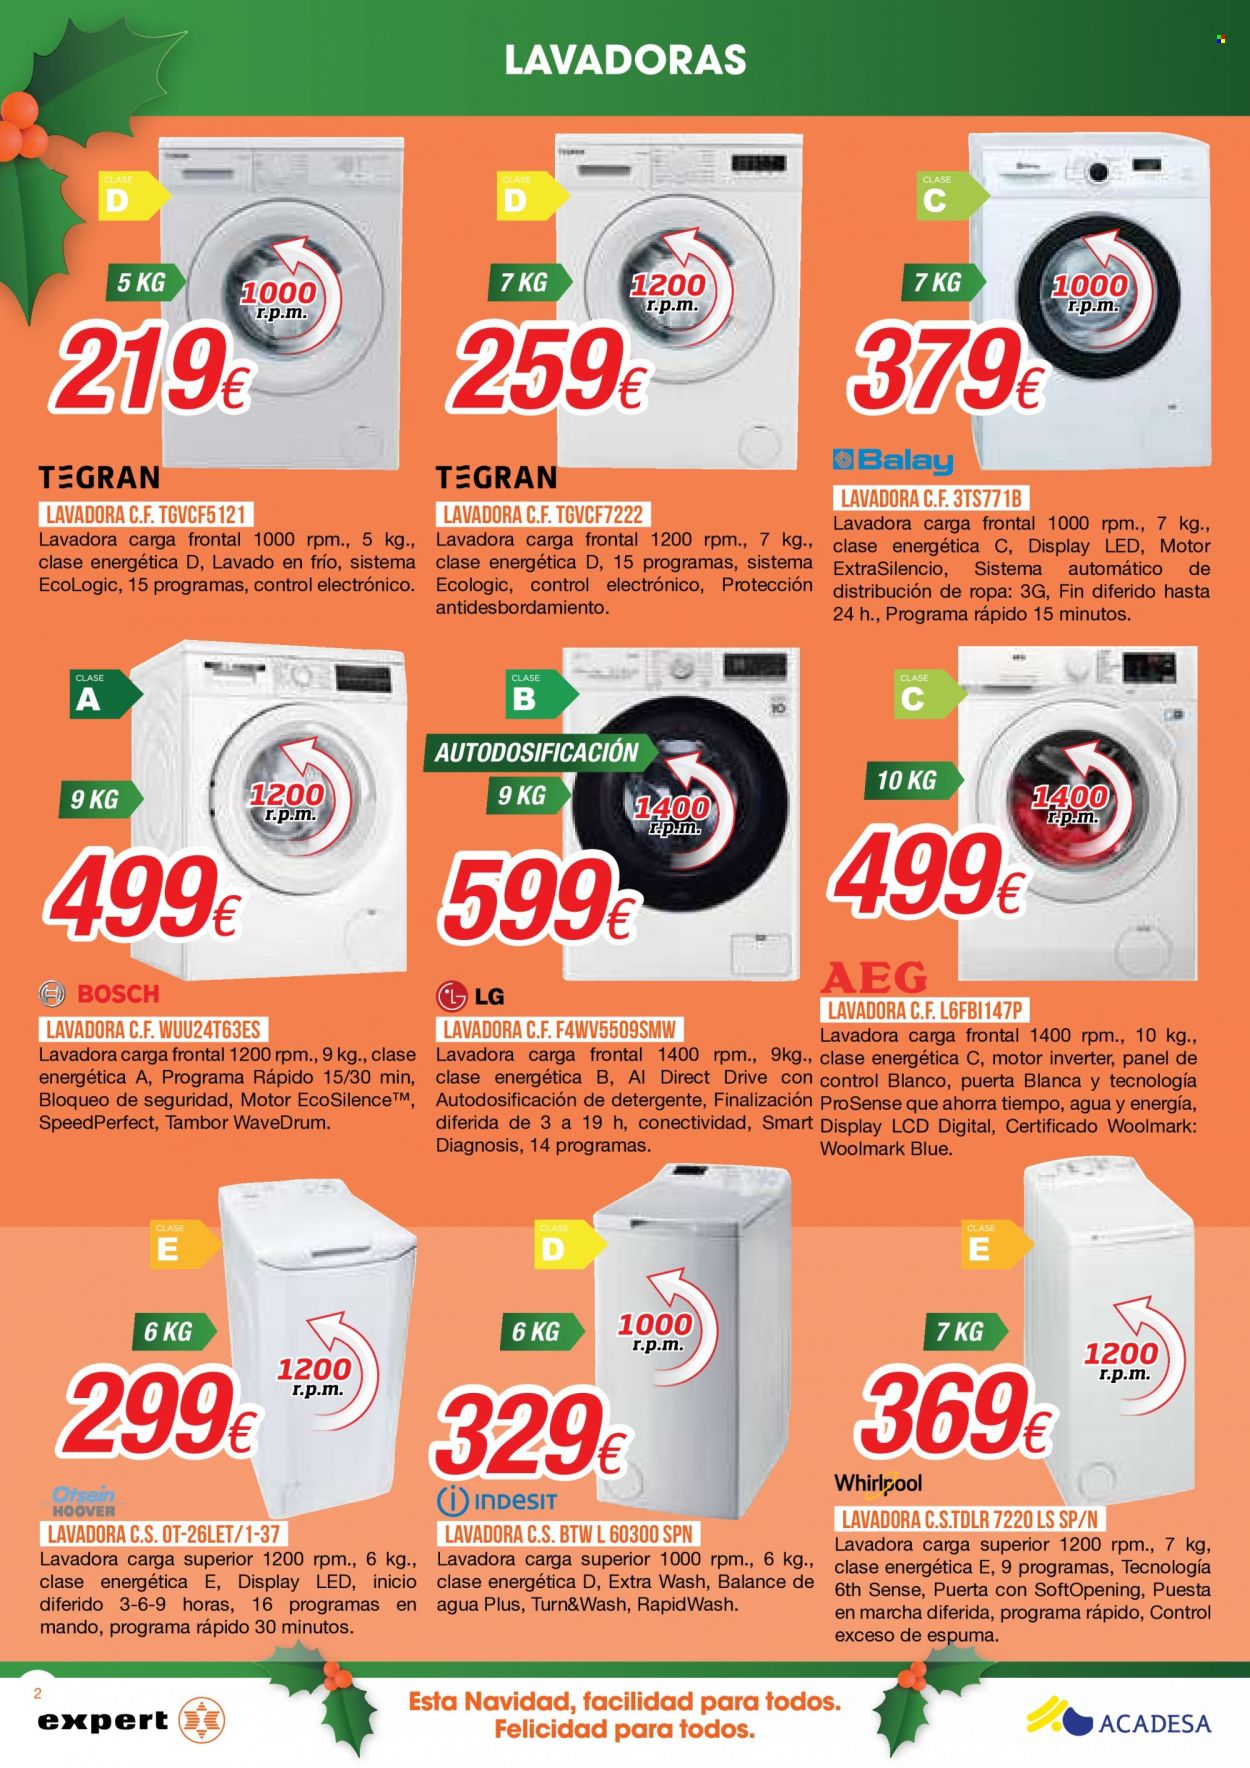 thumbnail - Folleto actual Acadesa - 09/12/22 - 05/01/23 - Ventas - lavadora. Página 2.